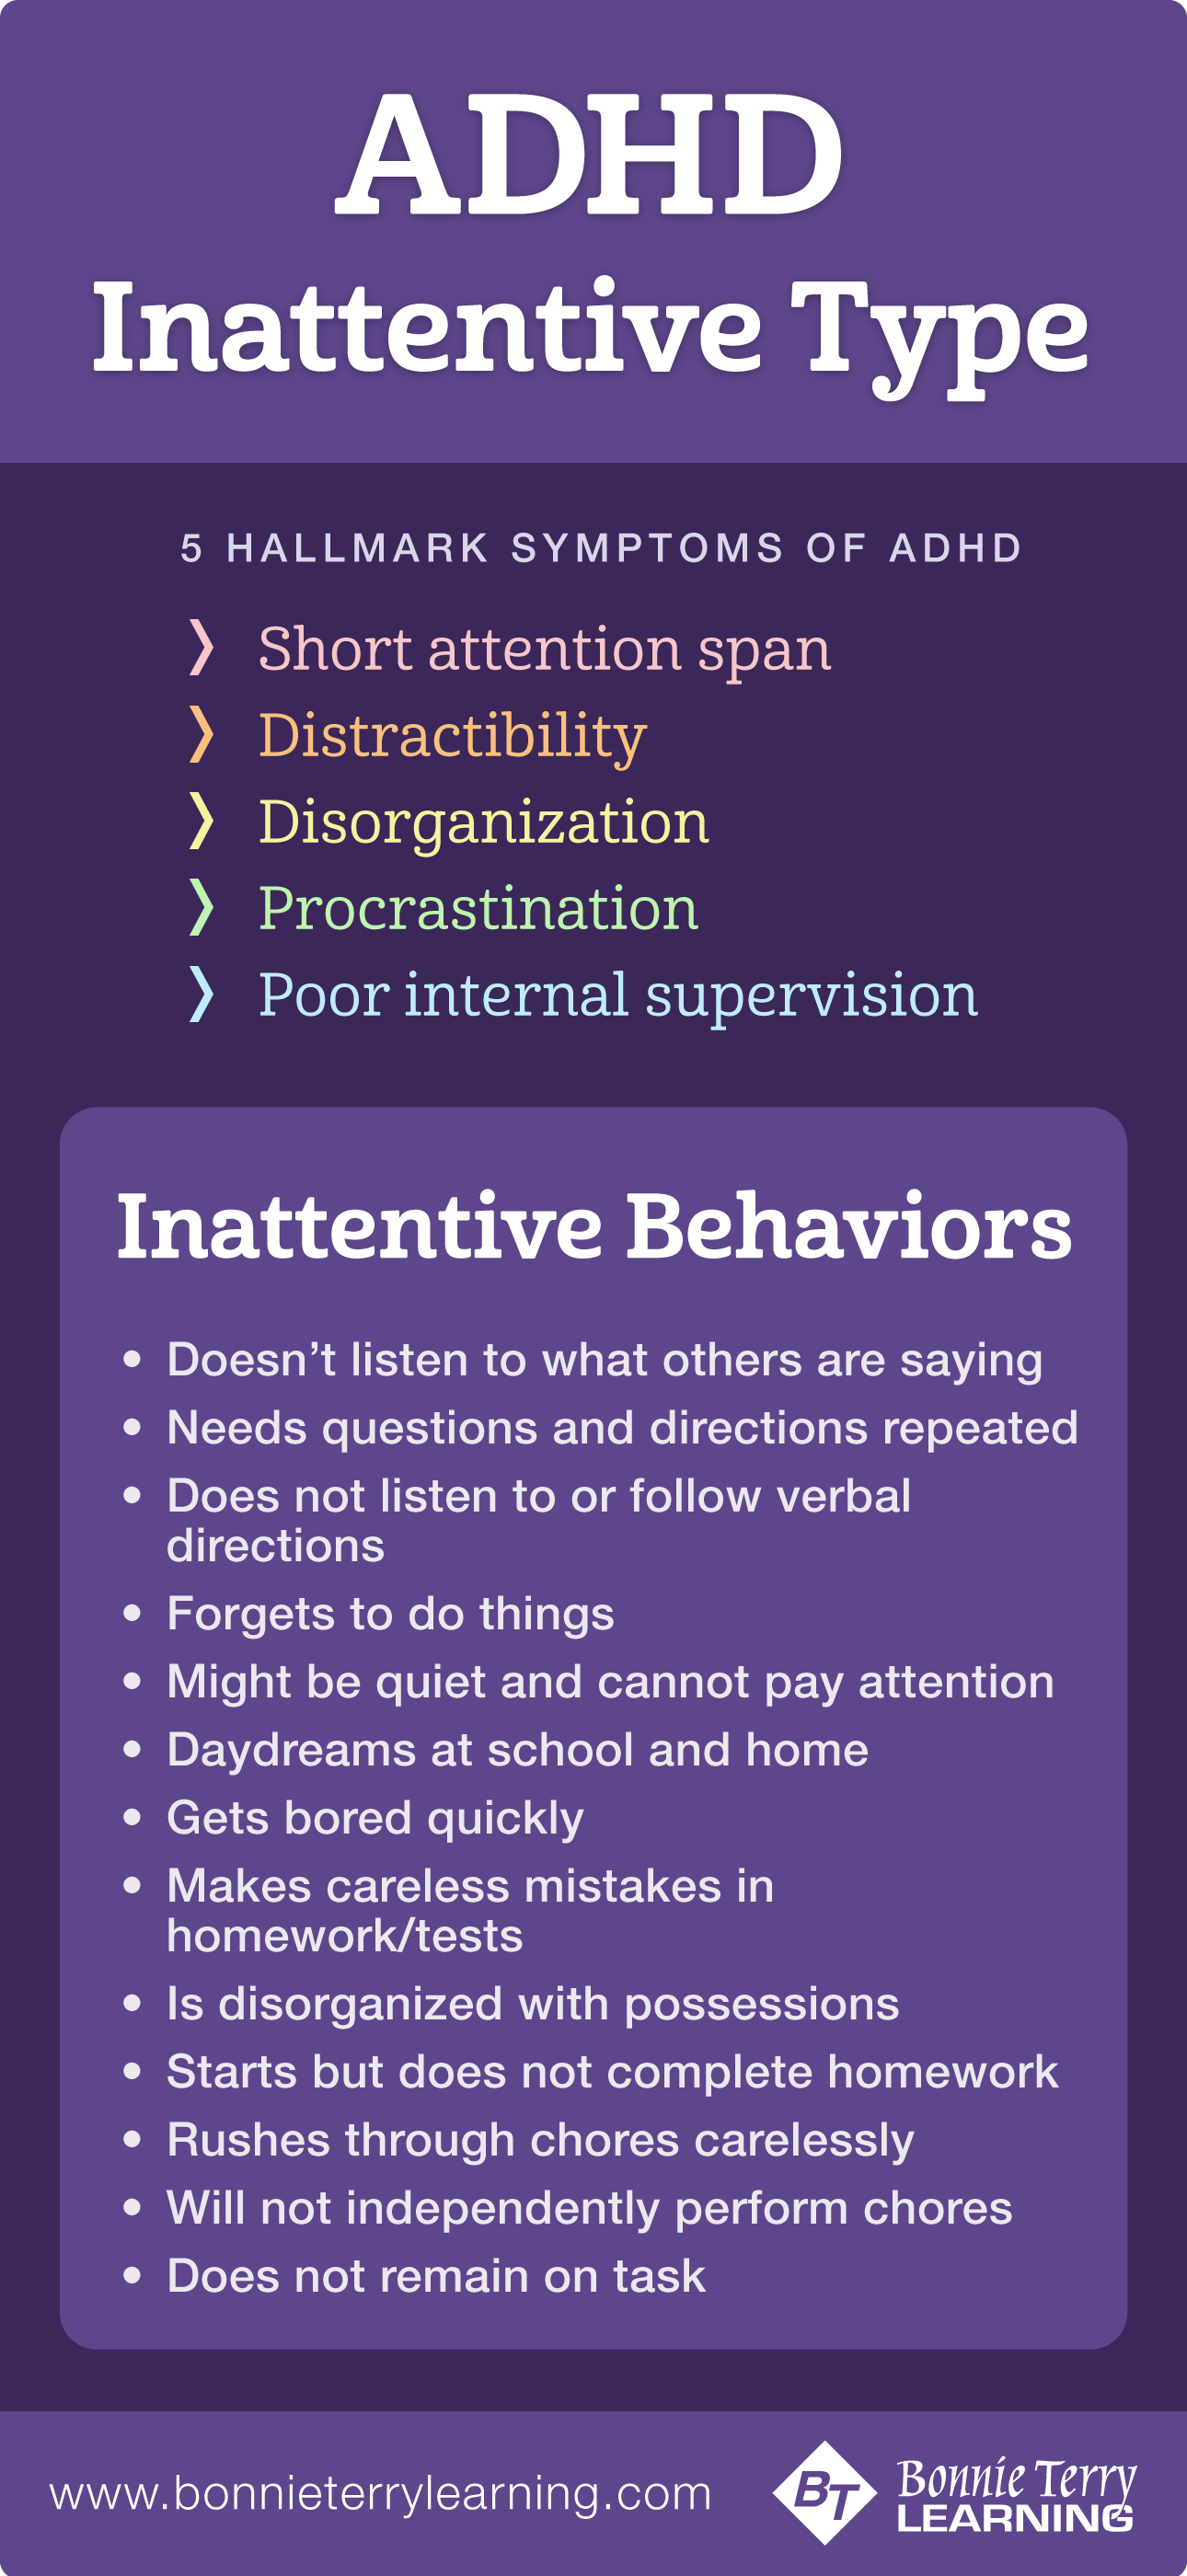 ADHD Inattentive Type